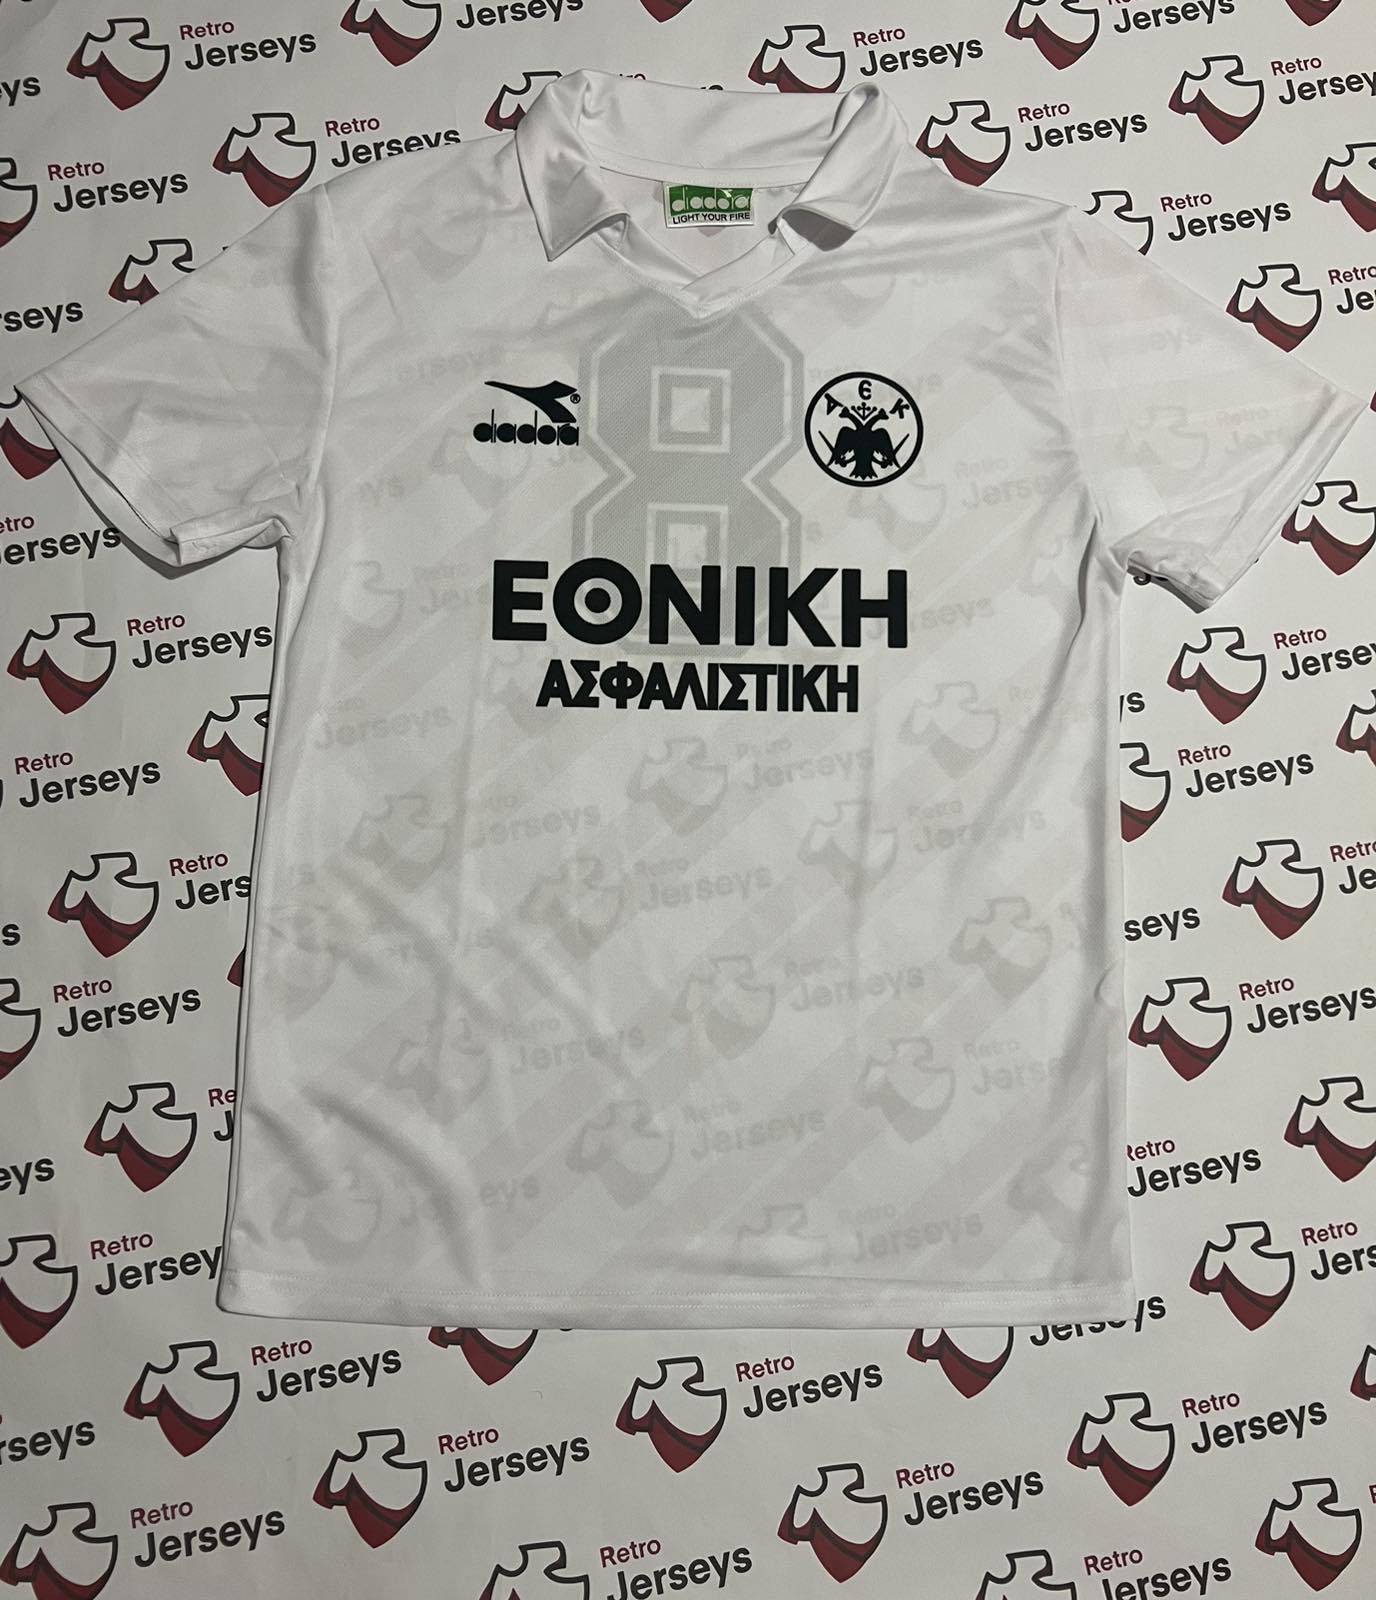 AEK Athens Shirt 1989-1990 Away - Retro Jerseys, φανέλα αεκ - Retro Jerseys